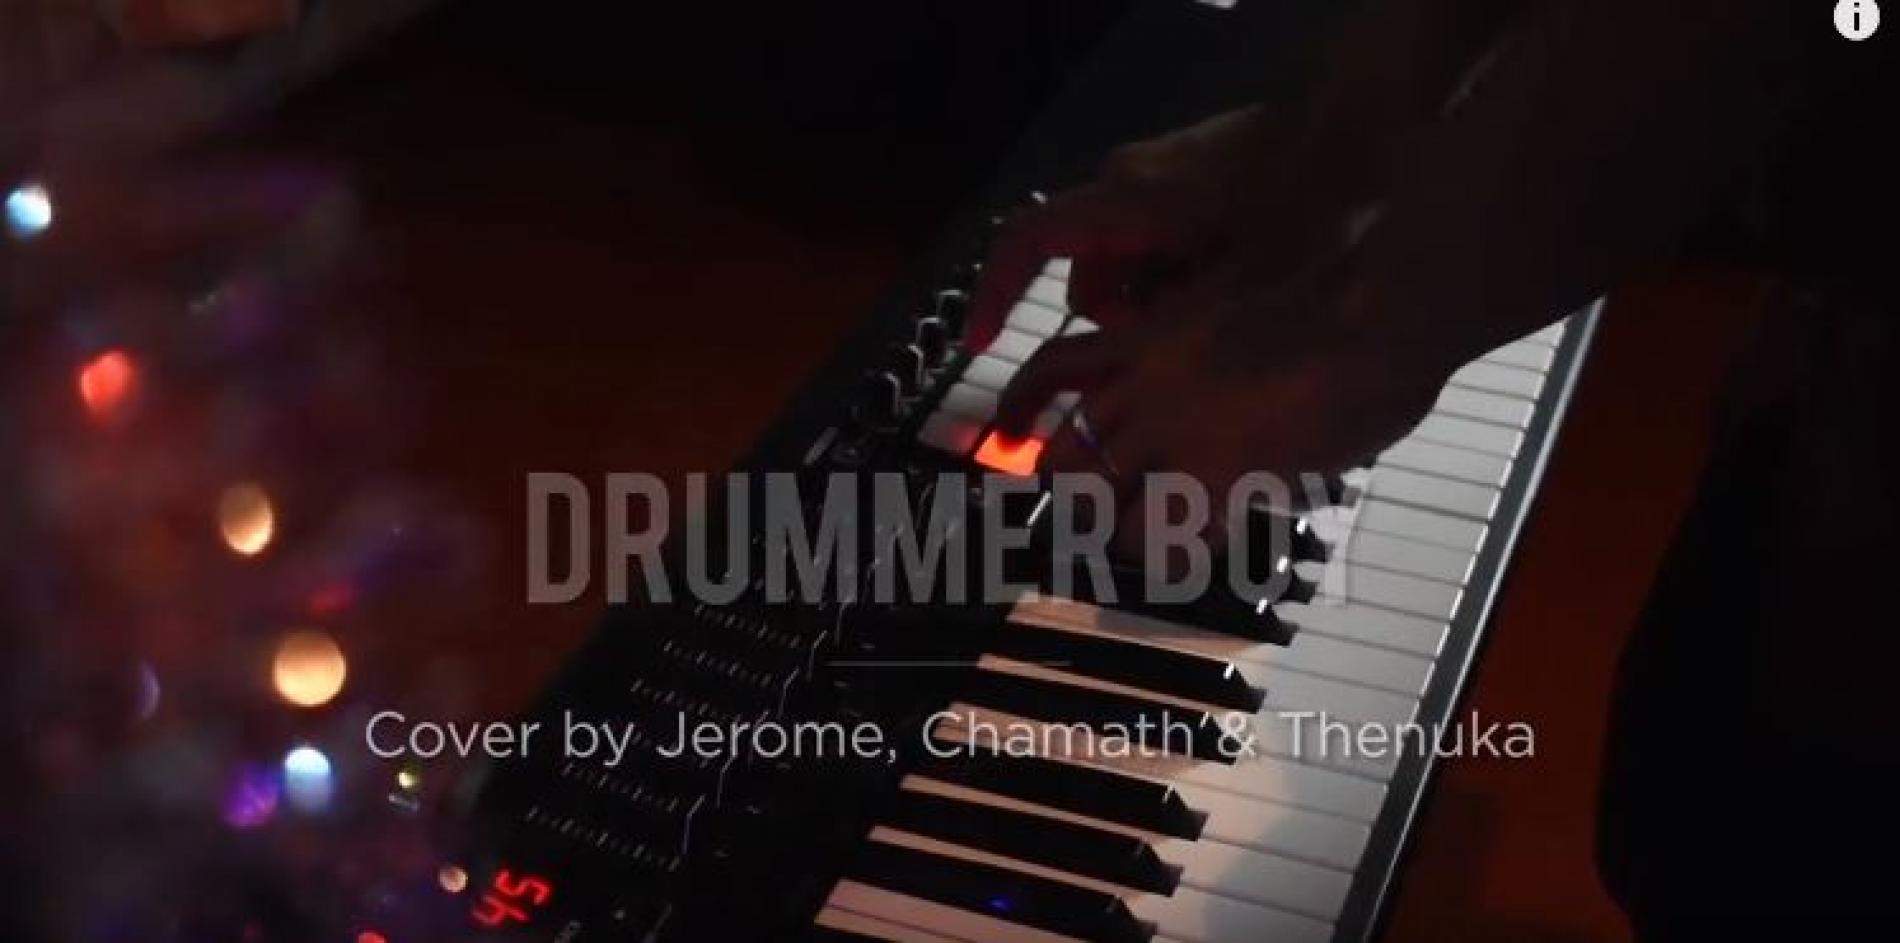 Jerome, Chamath & Thenuka – Drummer Boy (cover)